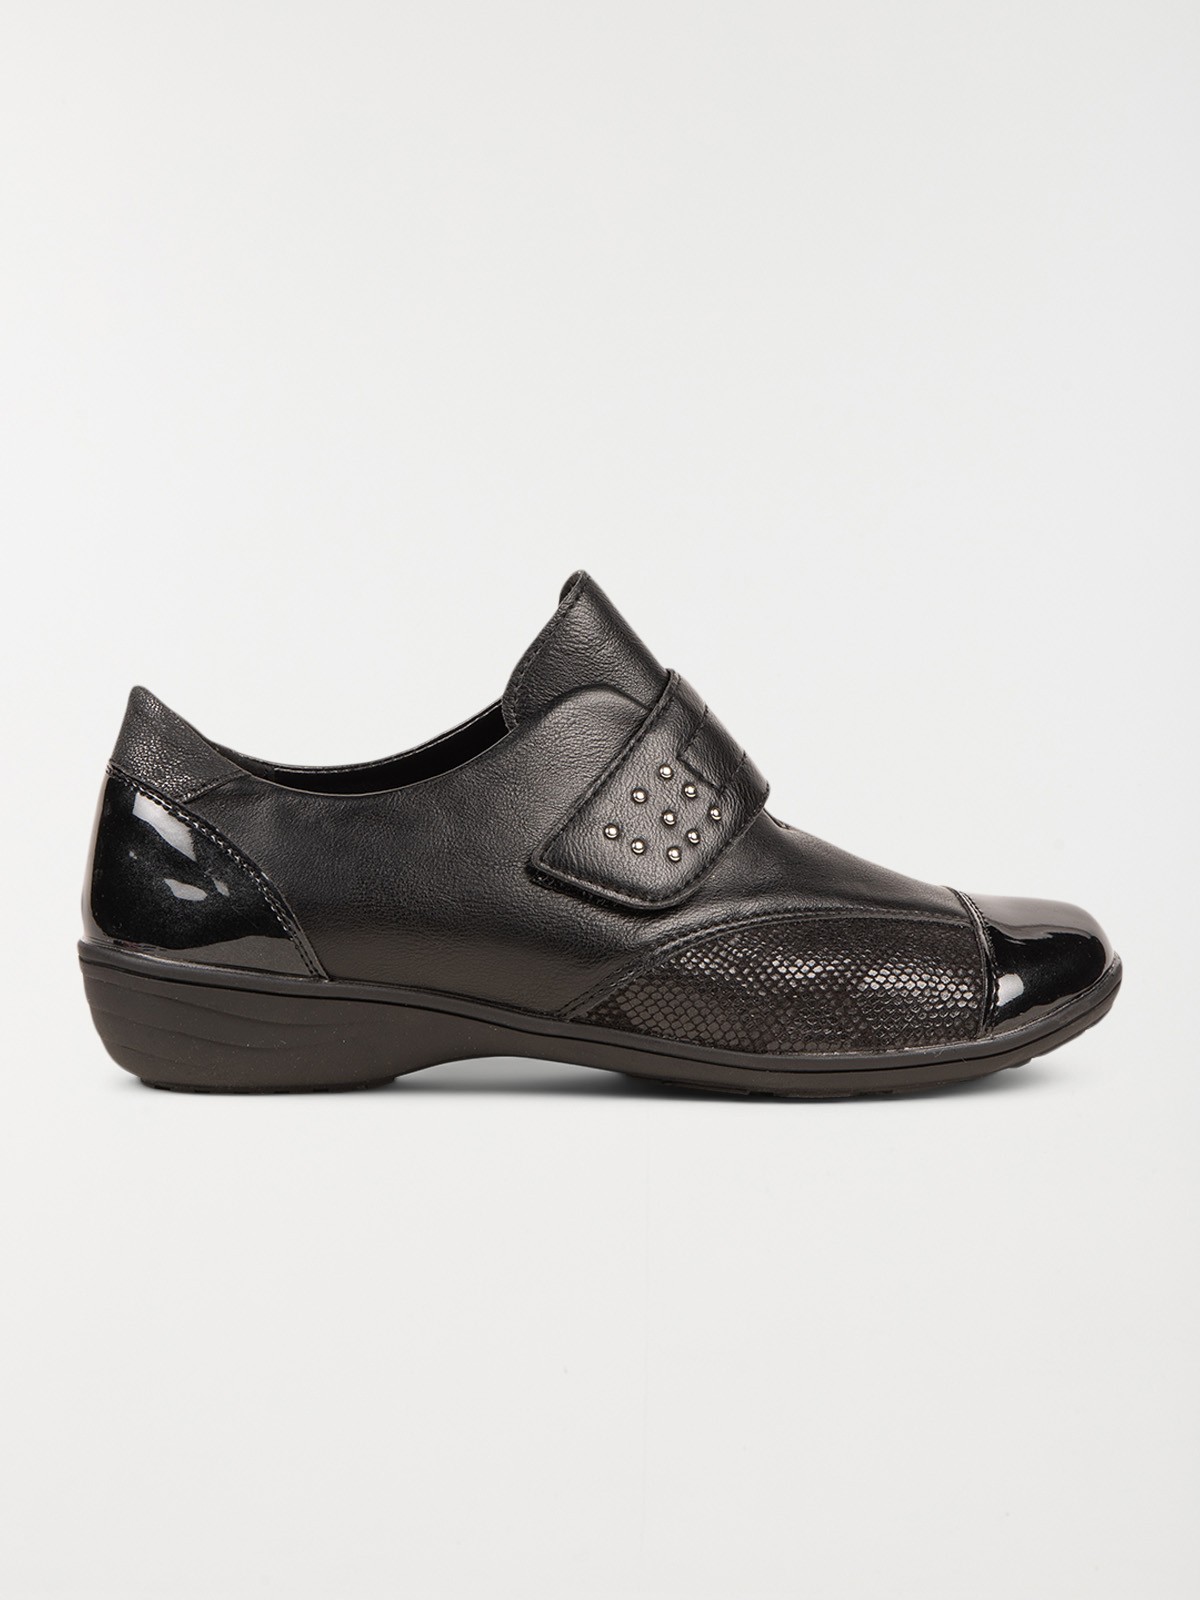 Chaussures femme confort noir (36-41) - DistriCenter